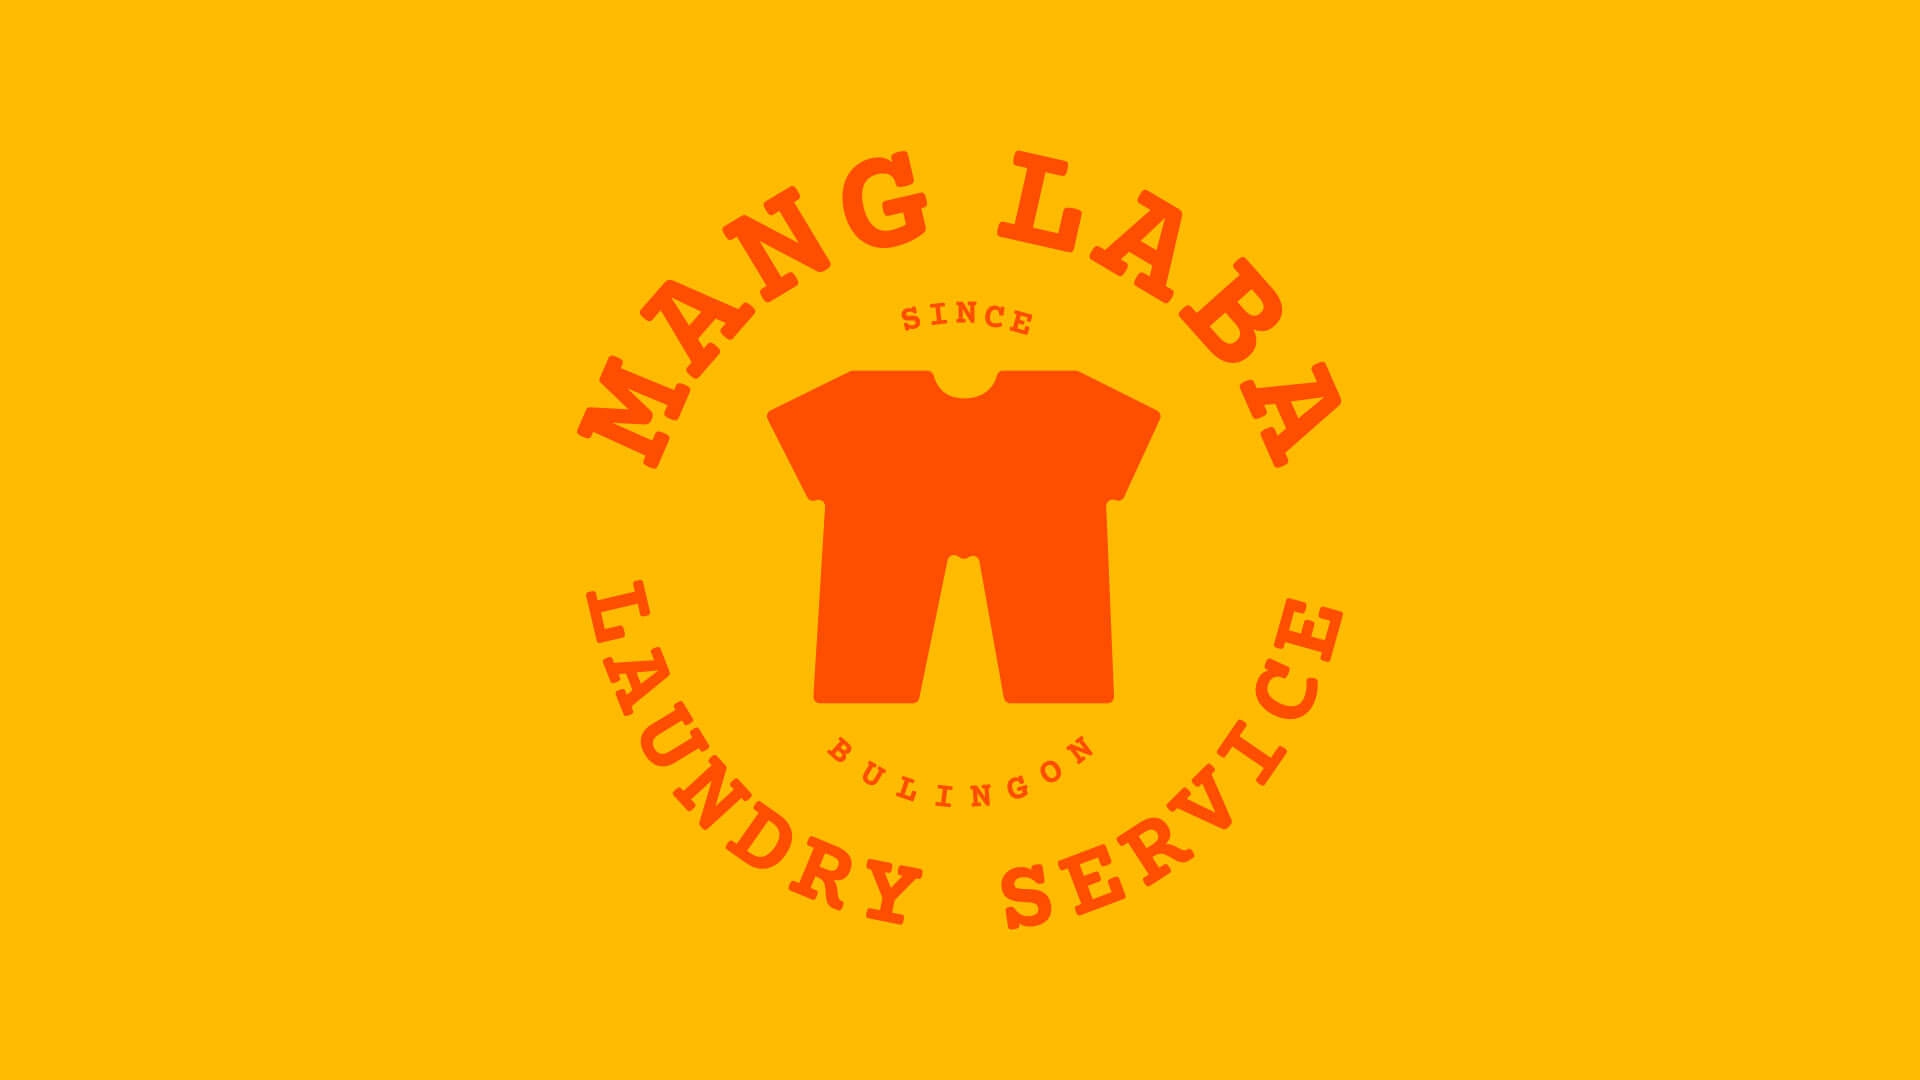 Manglaba Laundry Service - yellow